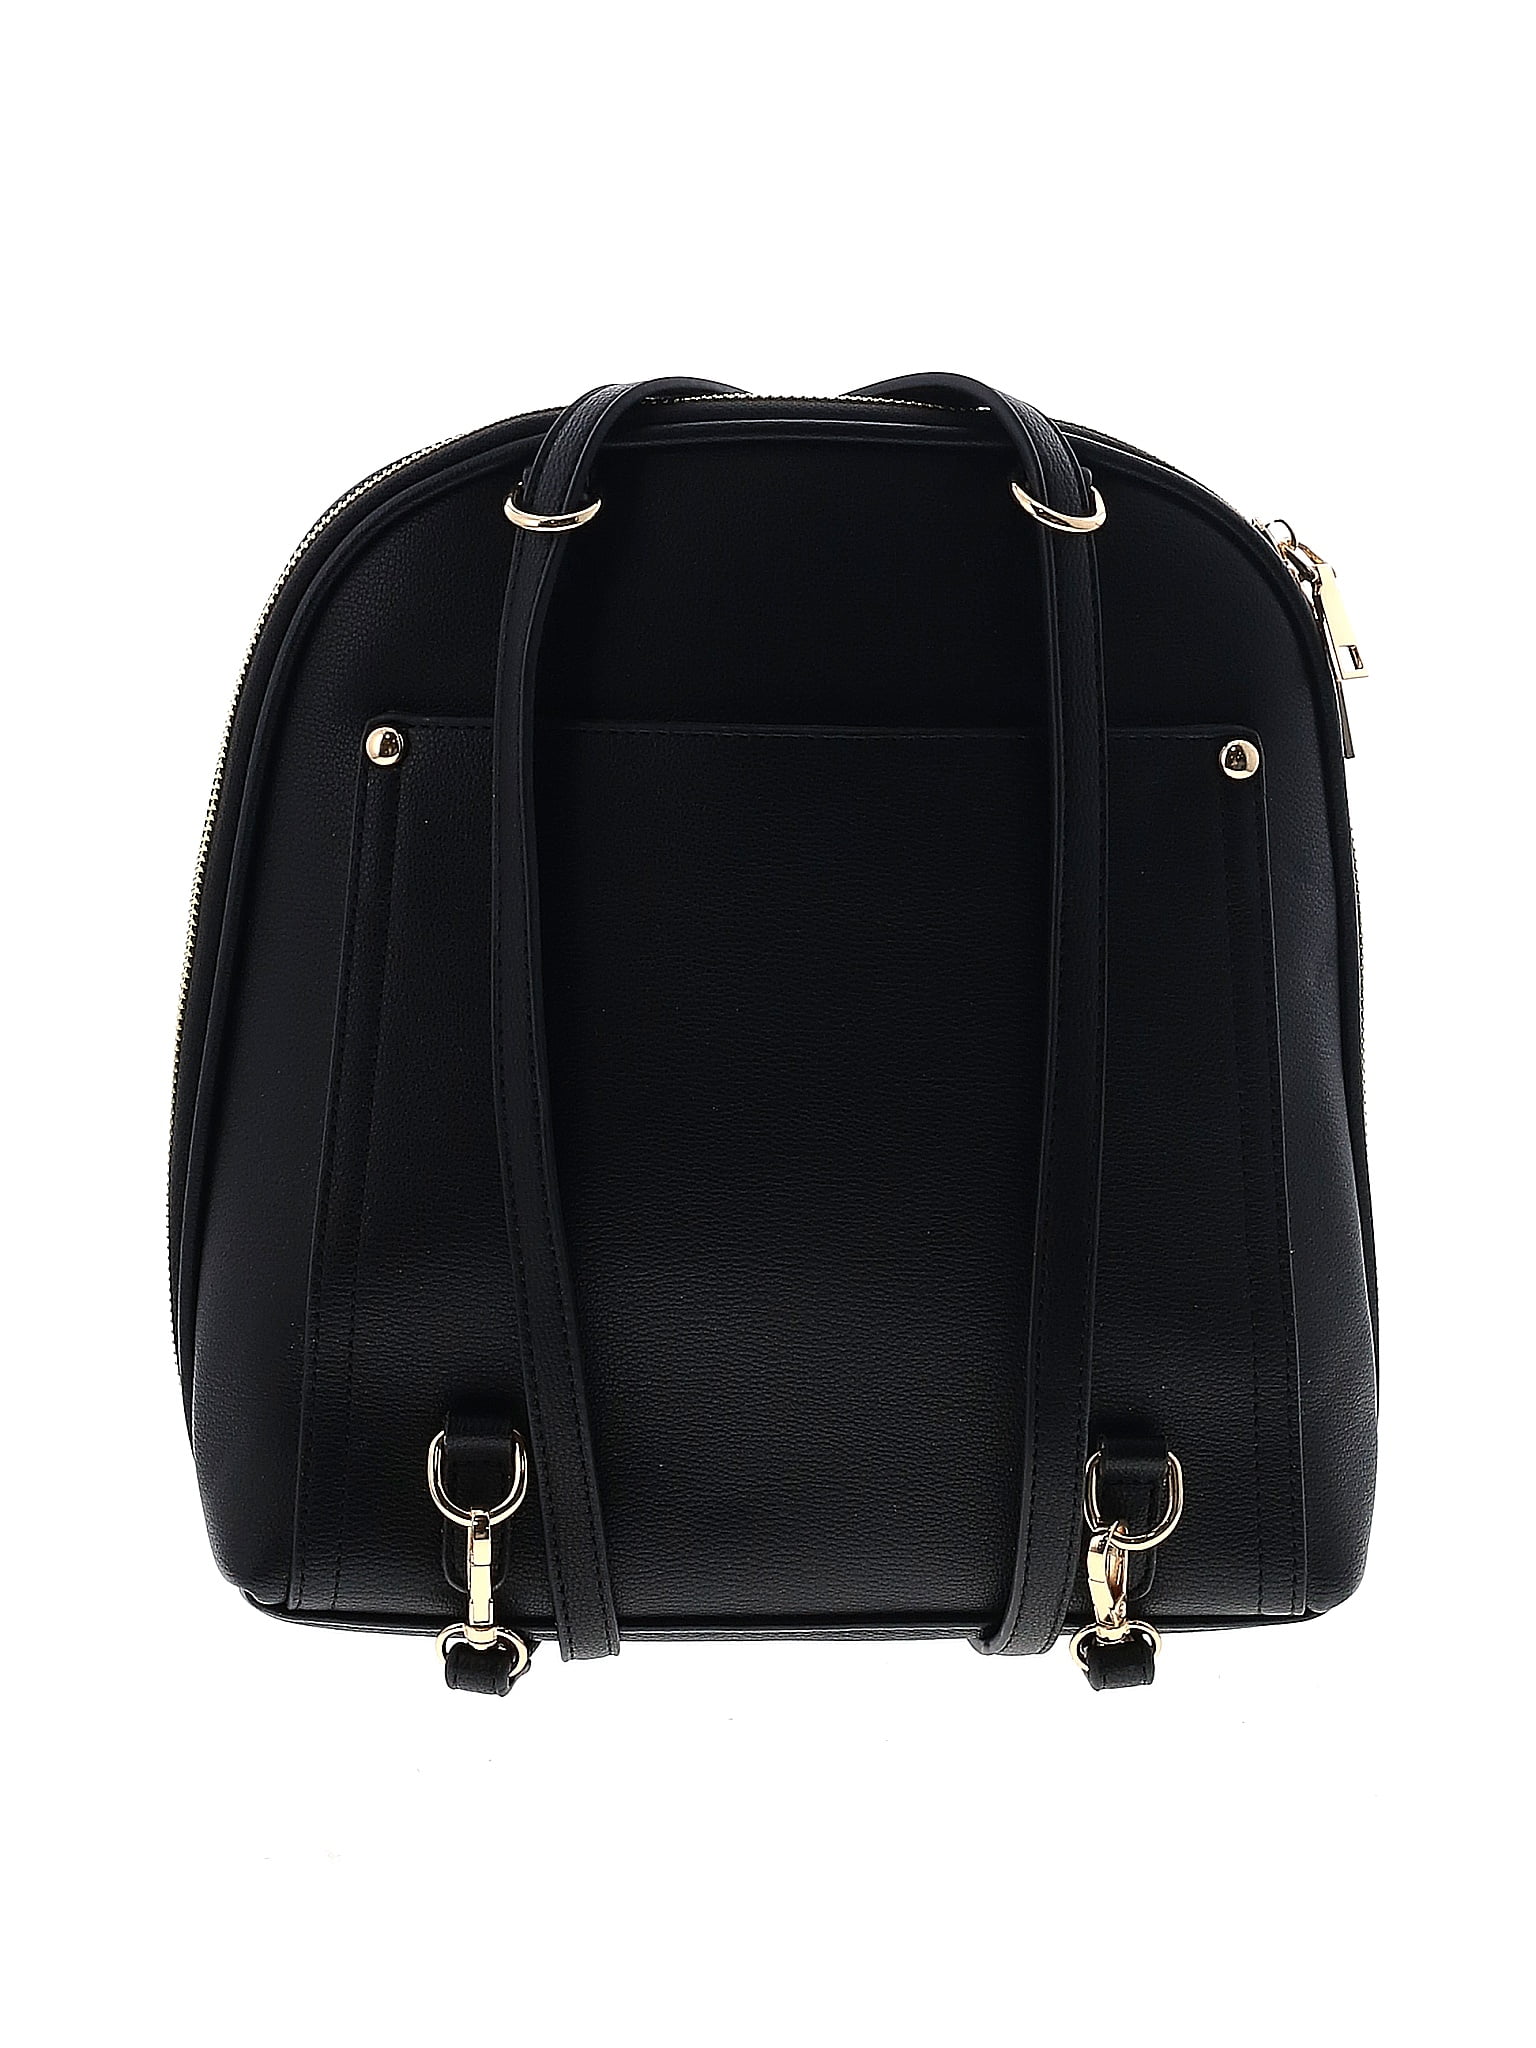 Miztique Solid Black Backpack One Size - 45% off